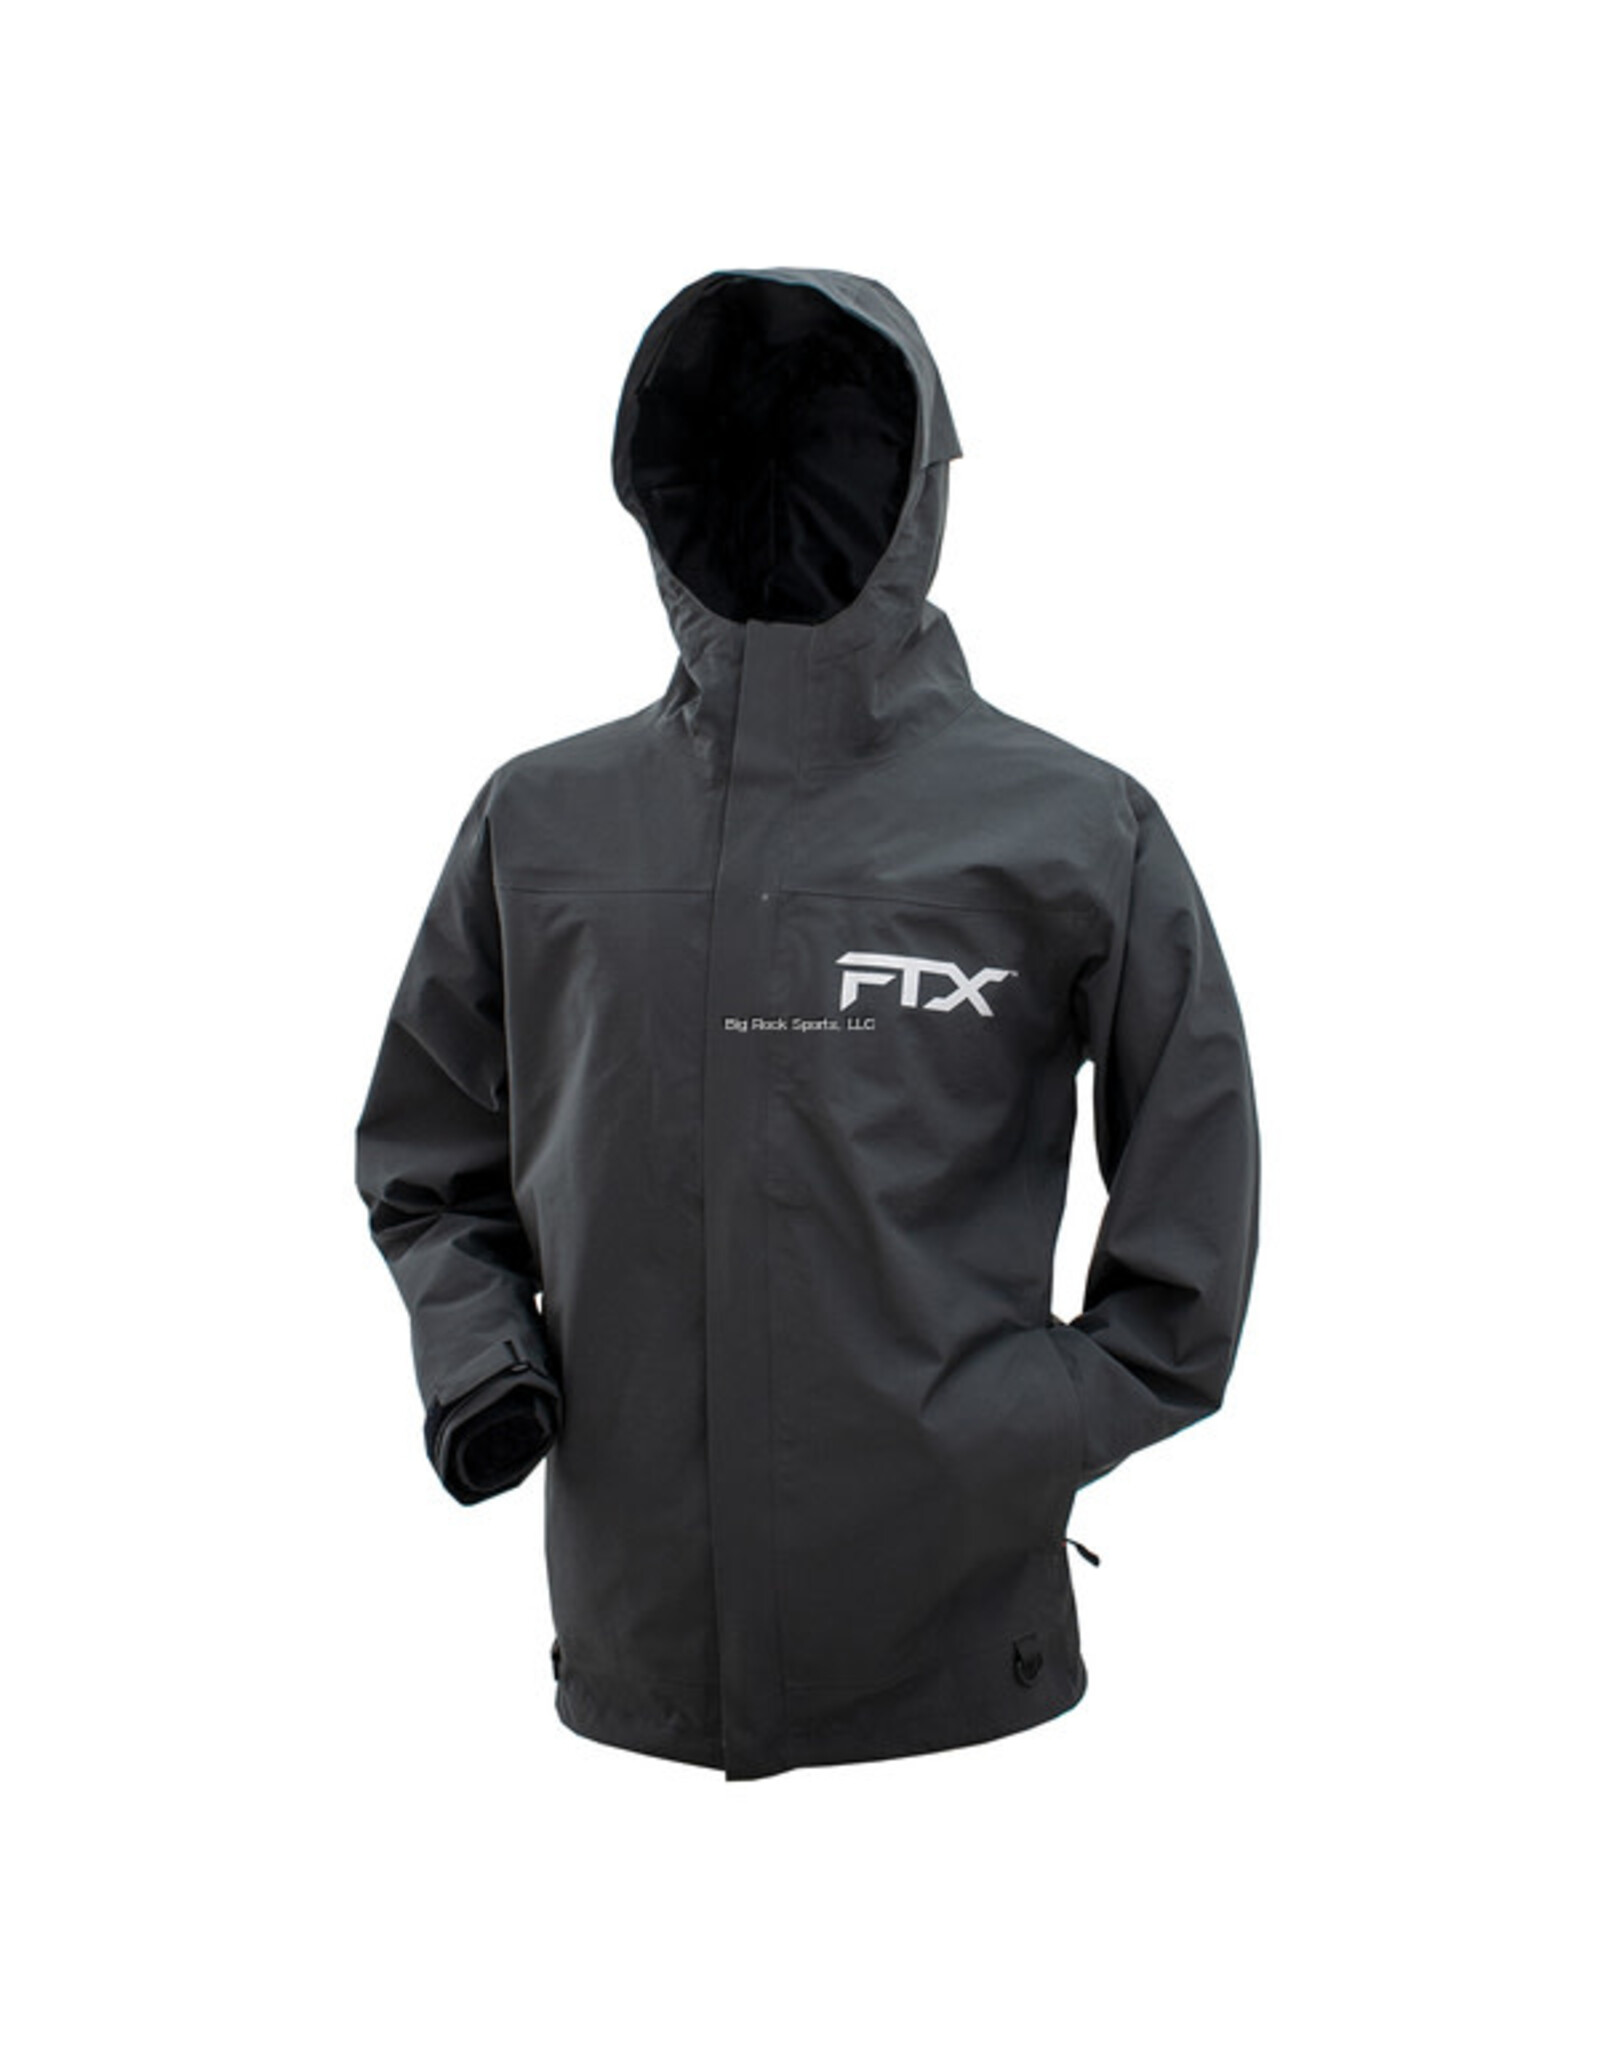 Frogg Toggs Frogg Toggs FTX Armor Jacket | Dark Graphite